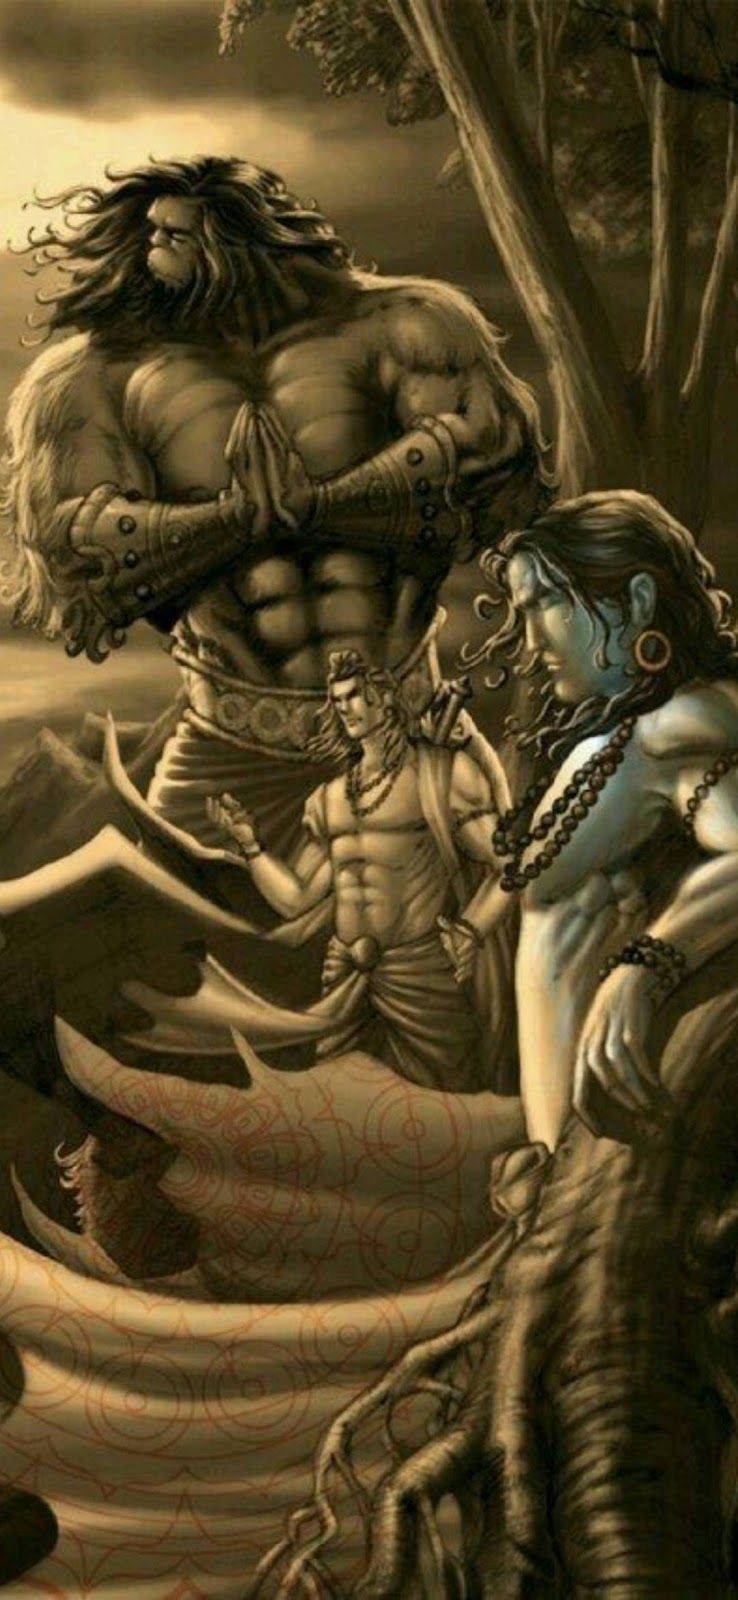 hindu god image with good morning. Lord hanuman